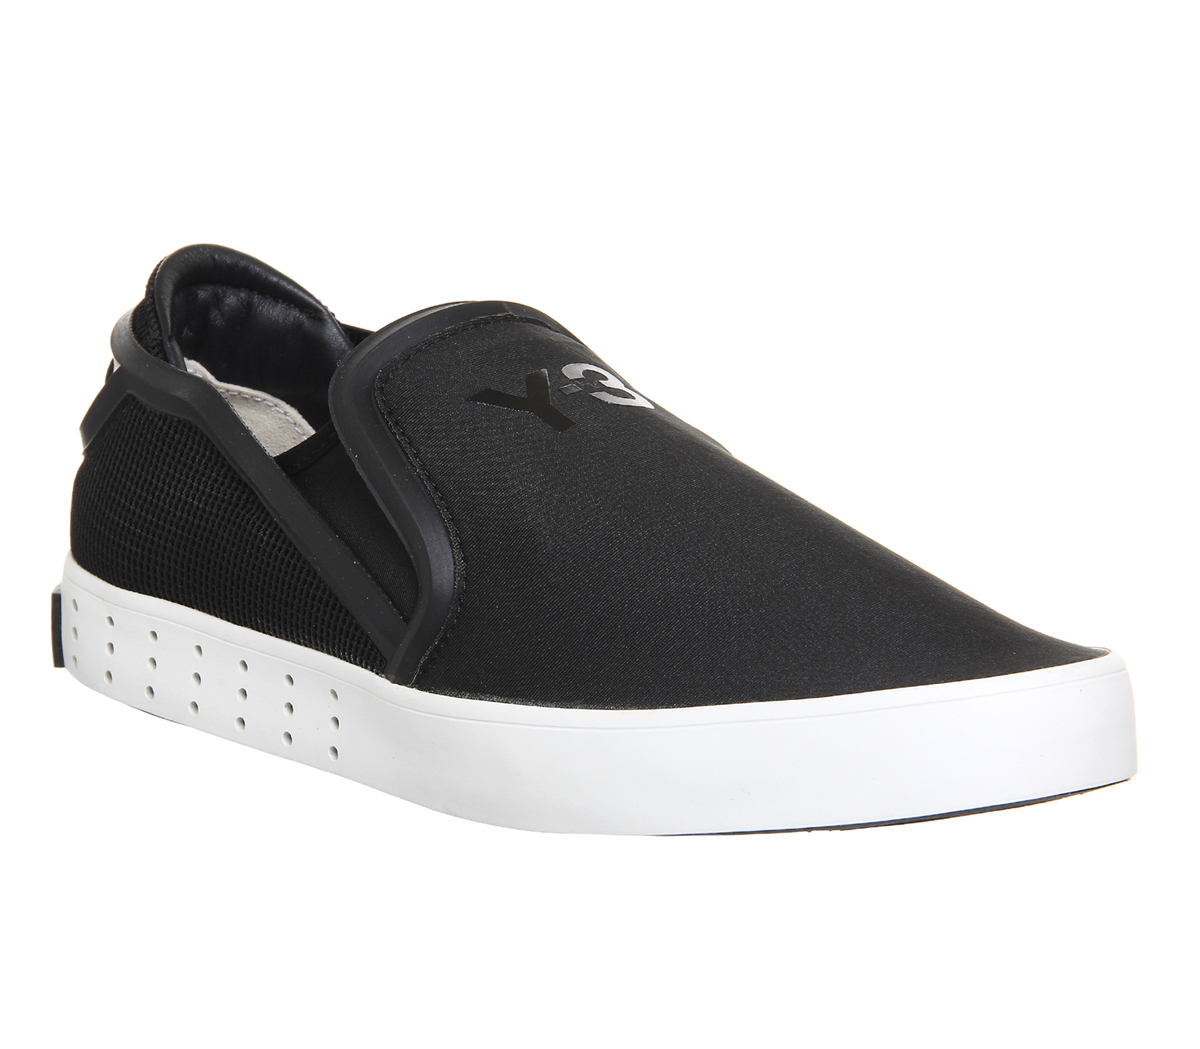 adidas Y3 Laver Slip On Black White - His trainers